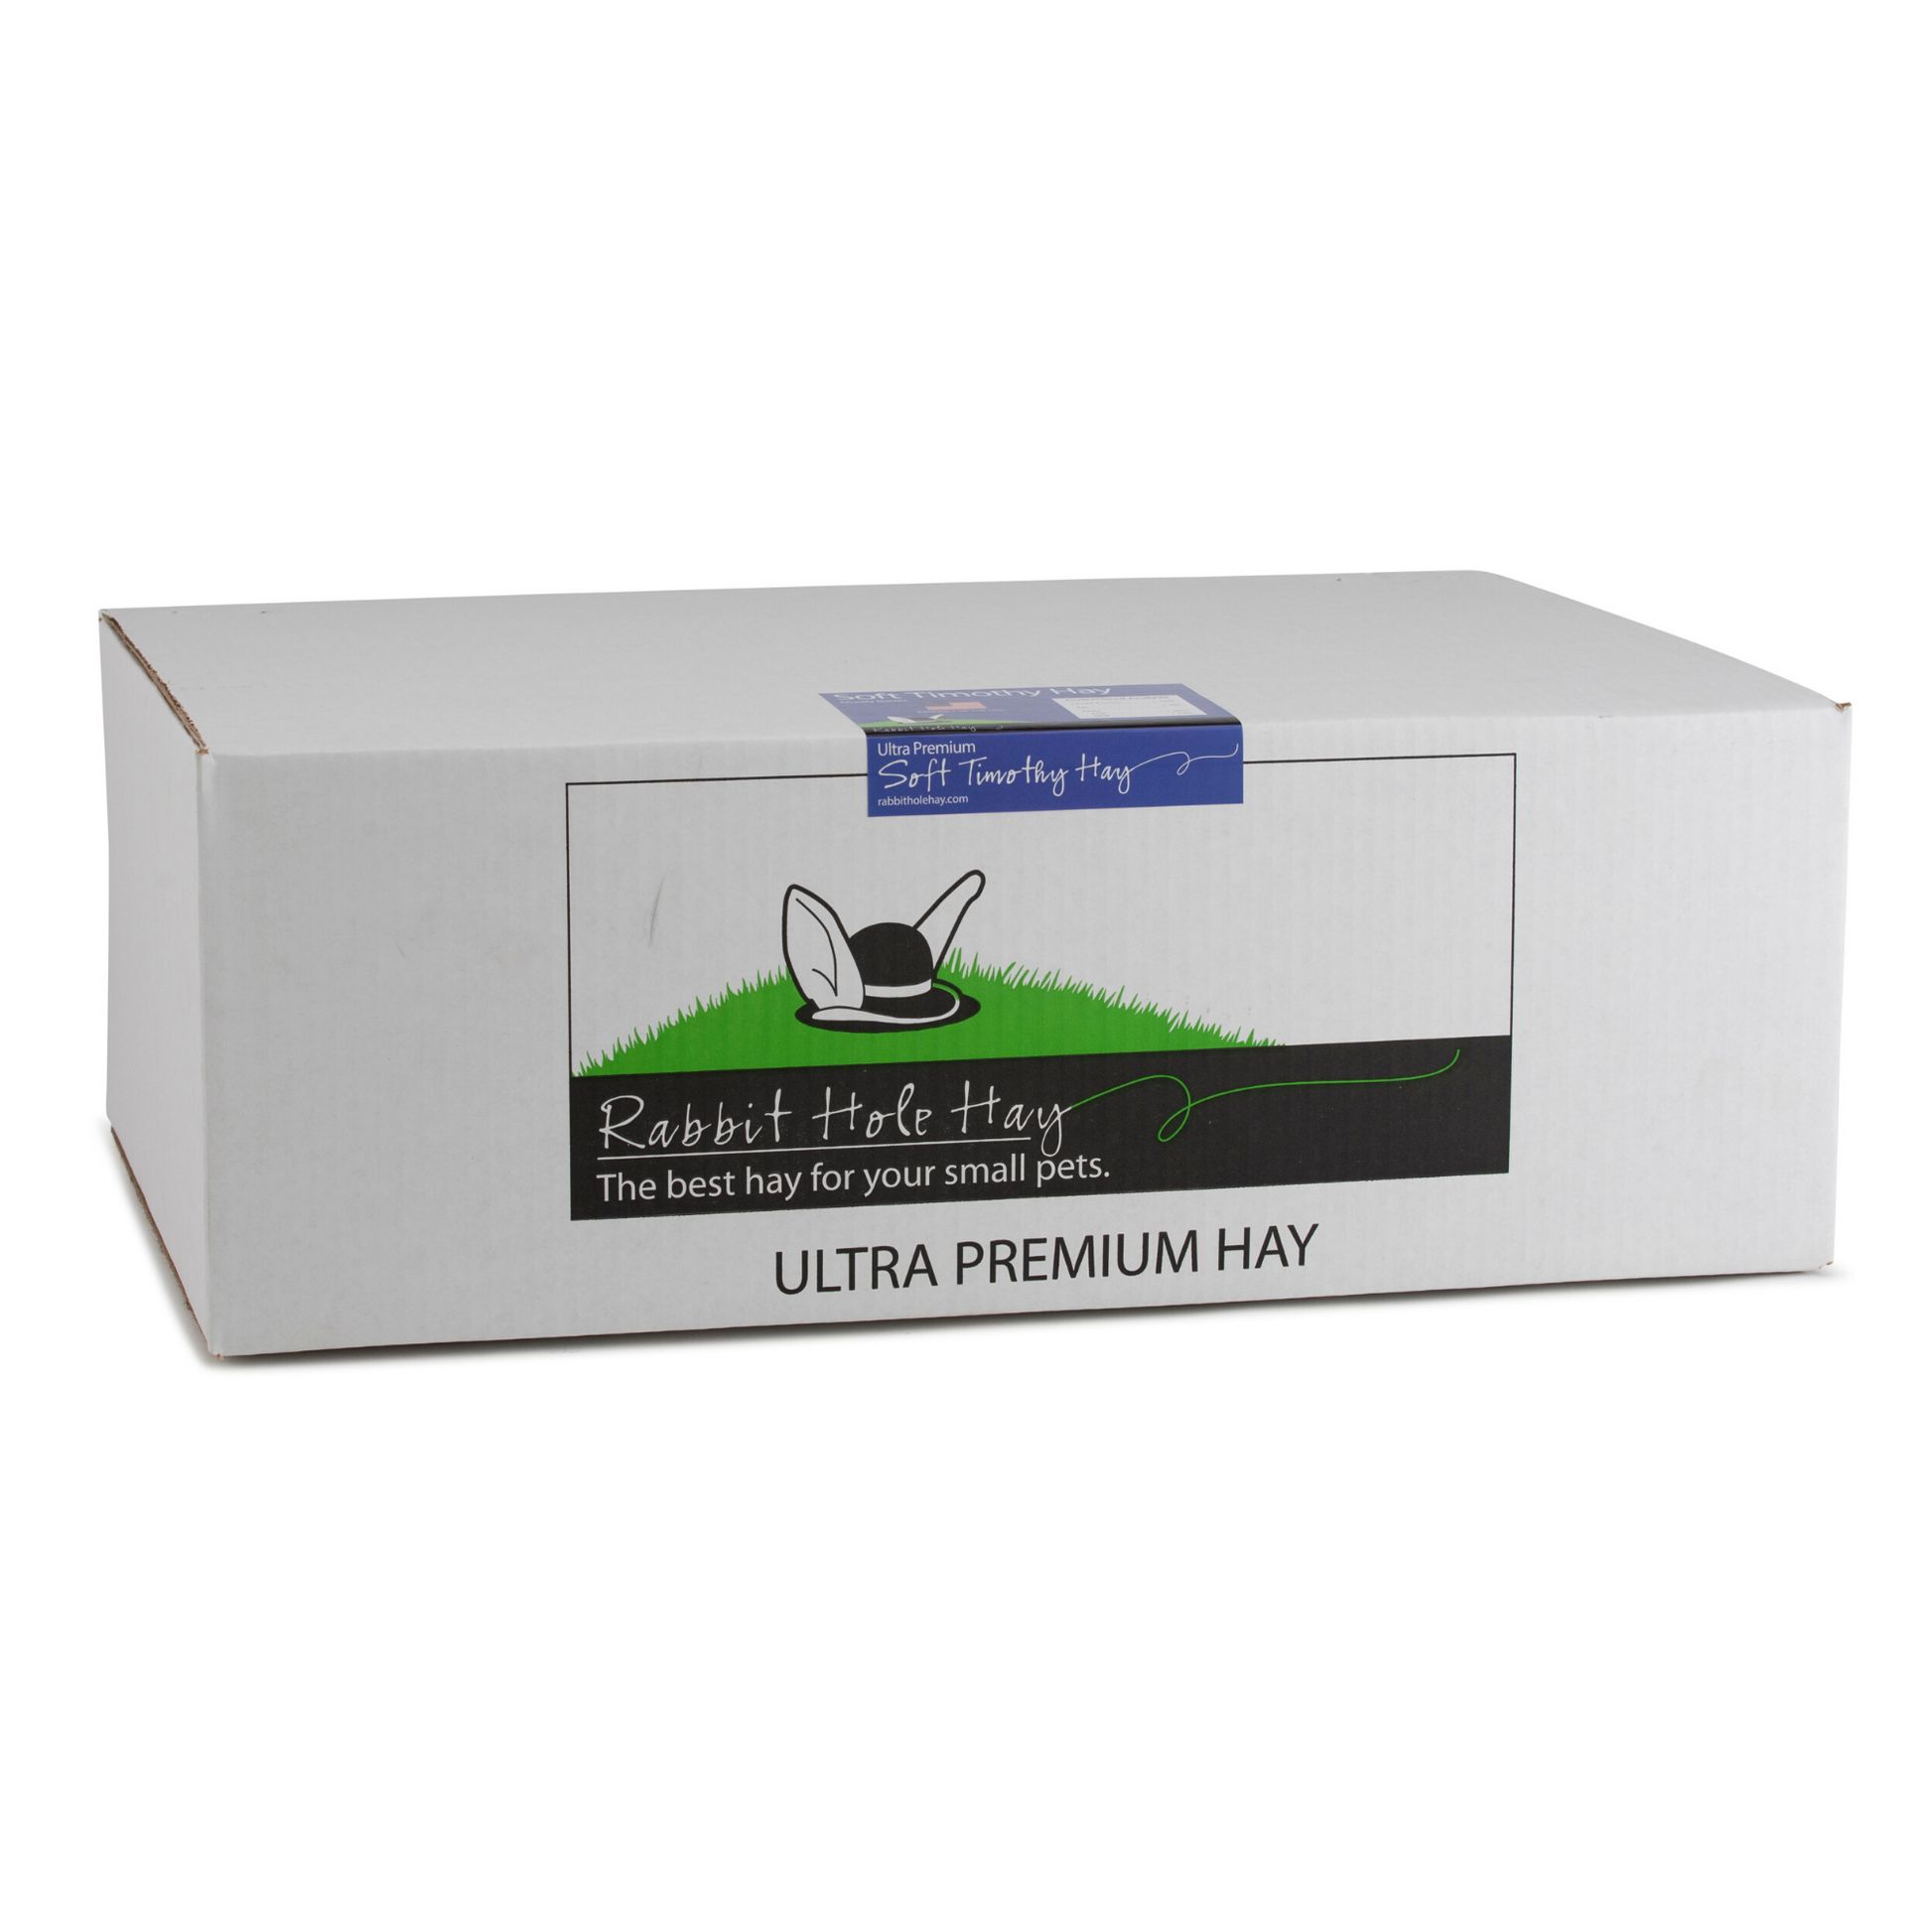 Ultra Premium Soft Timothy Hay - 10lbs